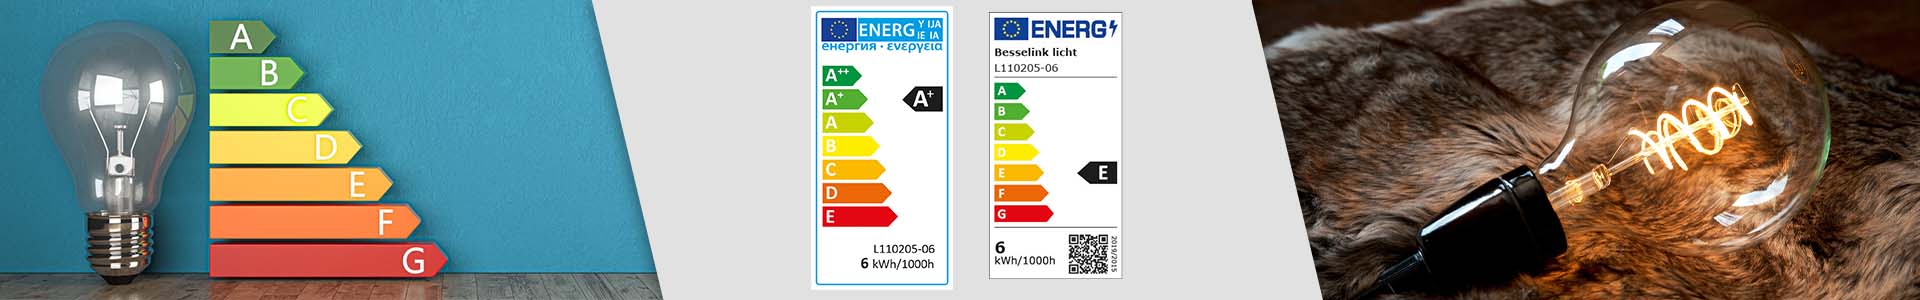 Banner_energielabels